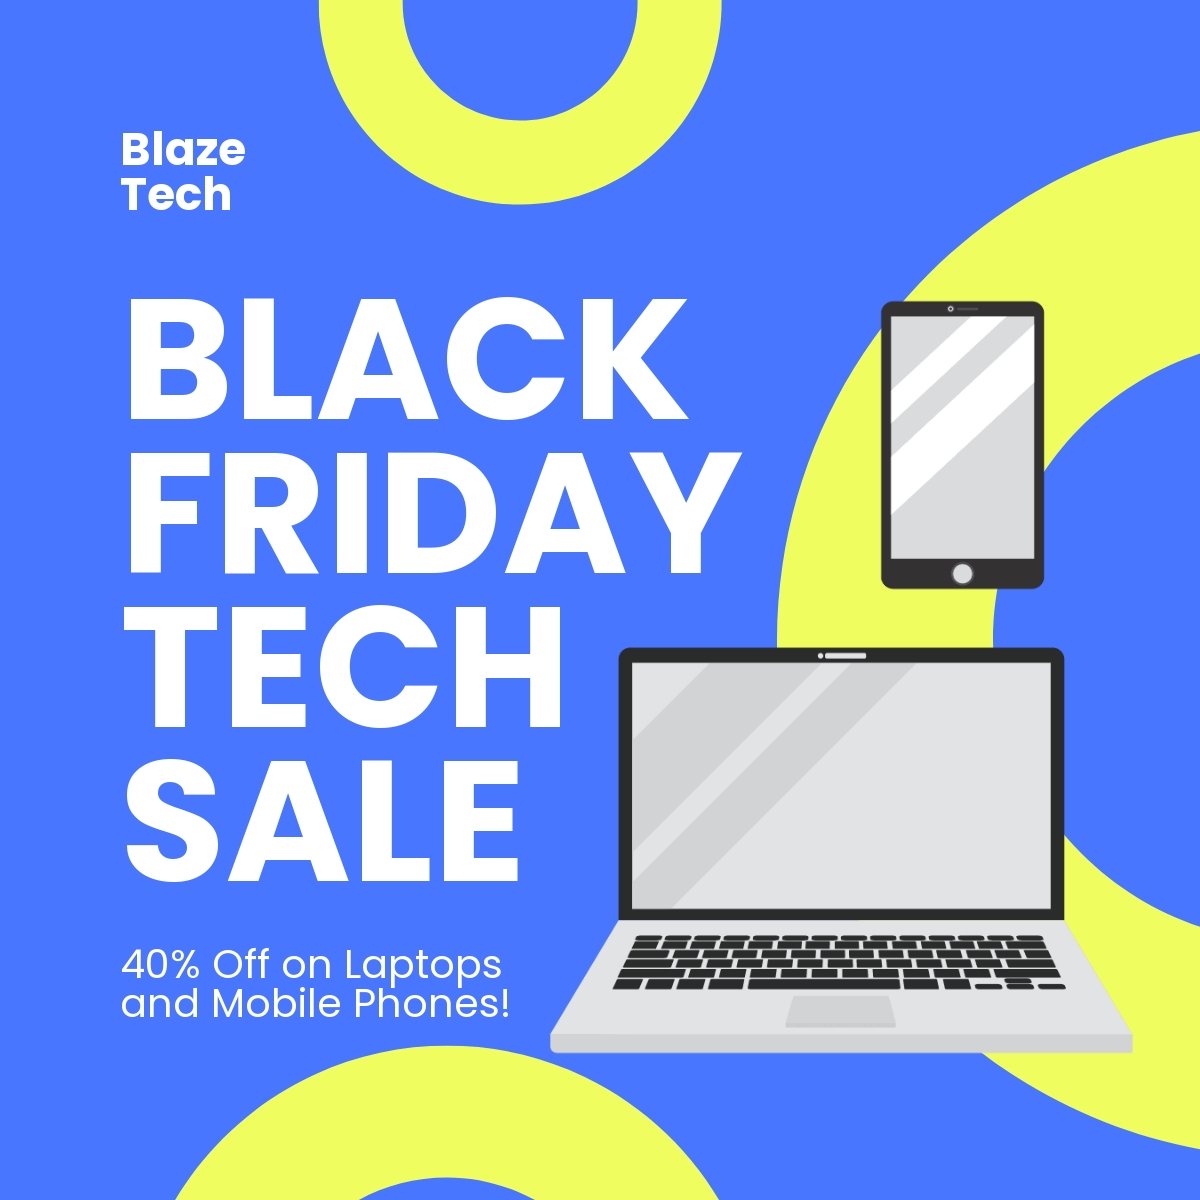 Black Friday Tech Sale LinkedIn Post Template